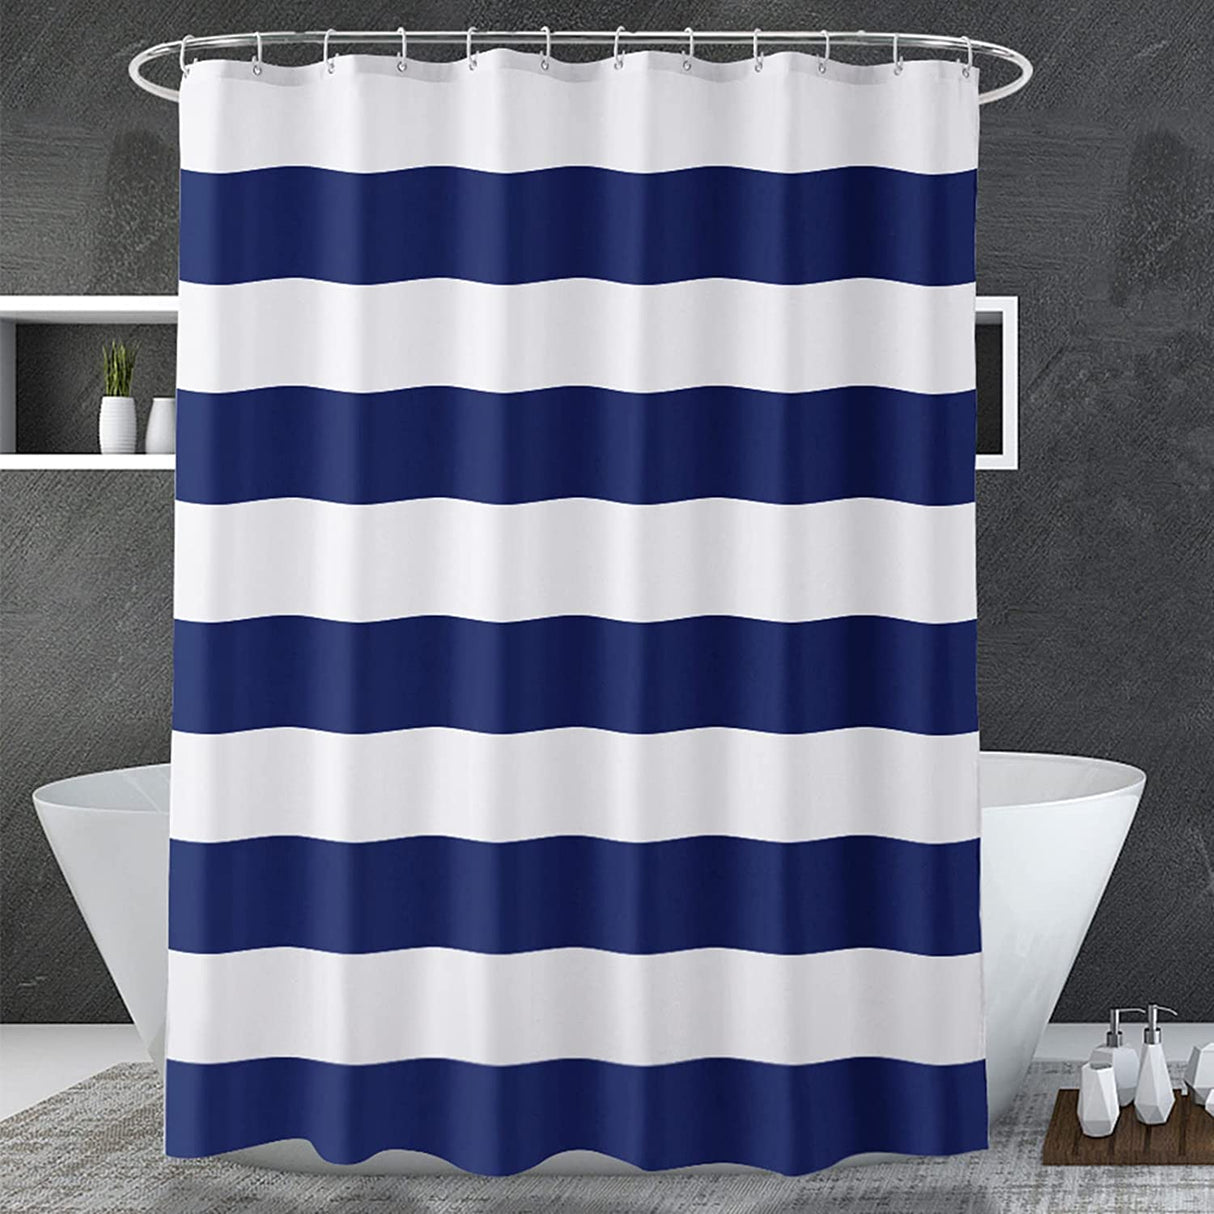 AmazerBath Shower Curtain Stripes, Fabric Shower Curtain for Bathroom